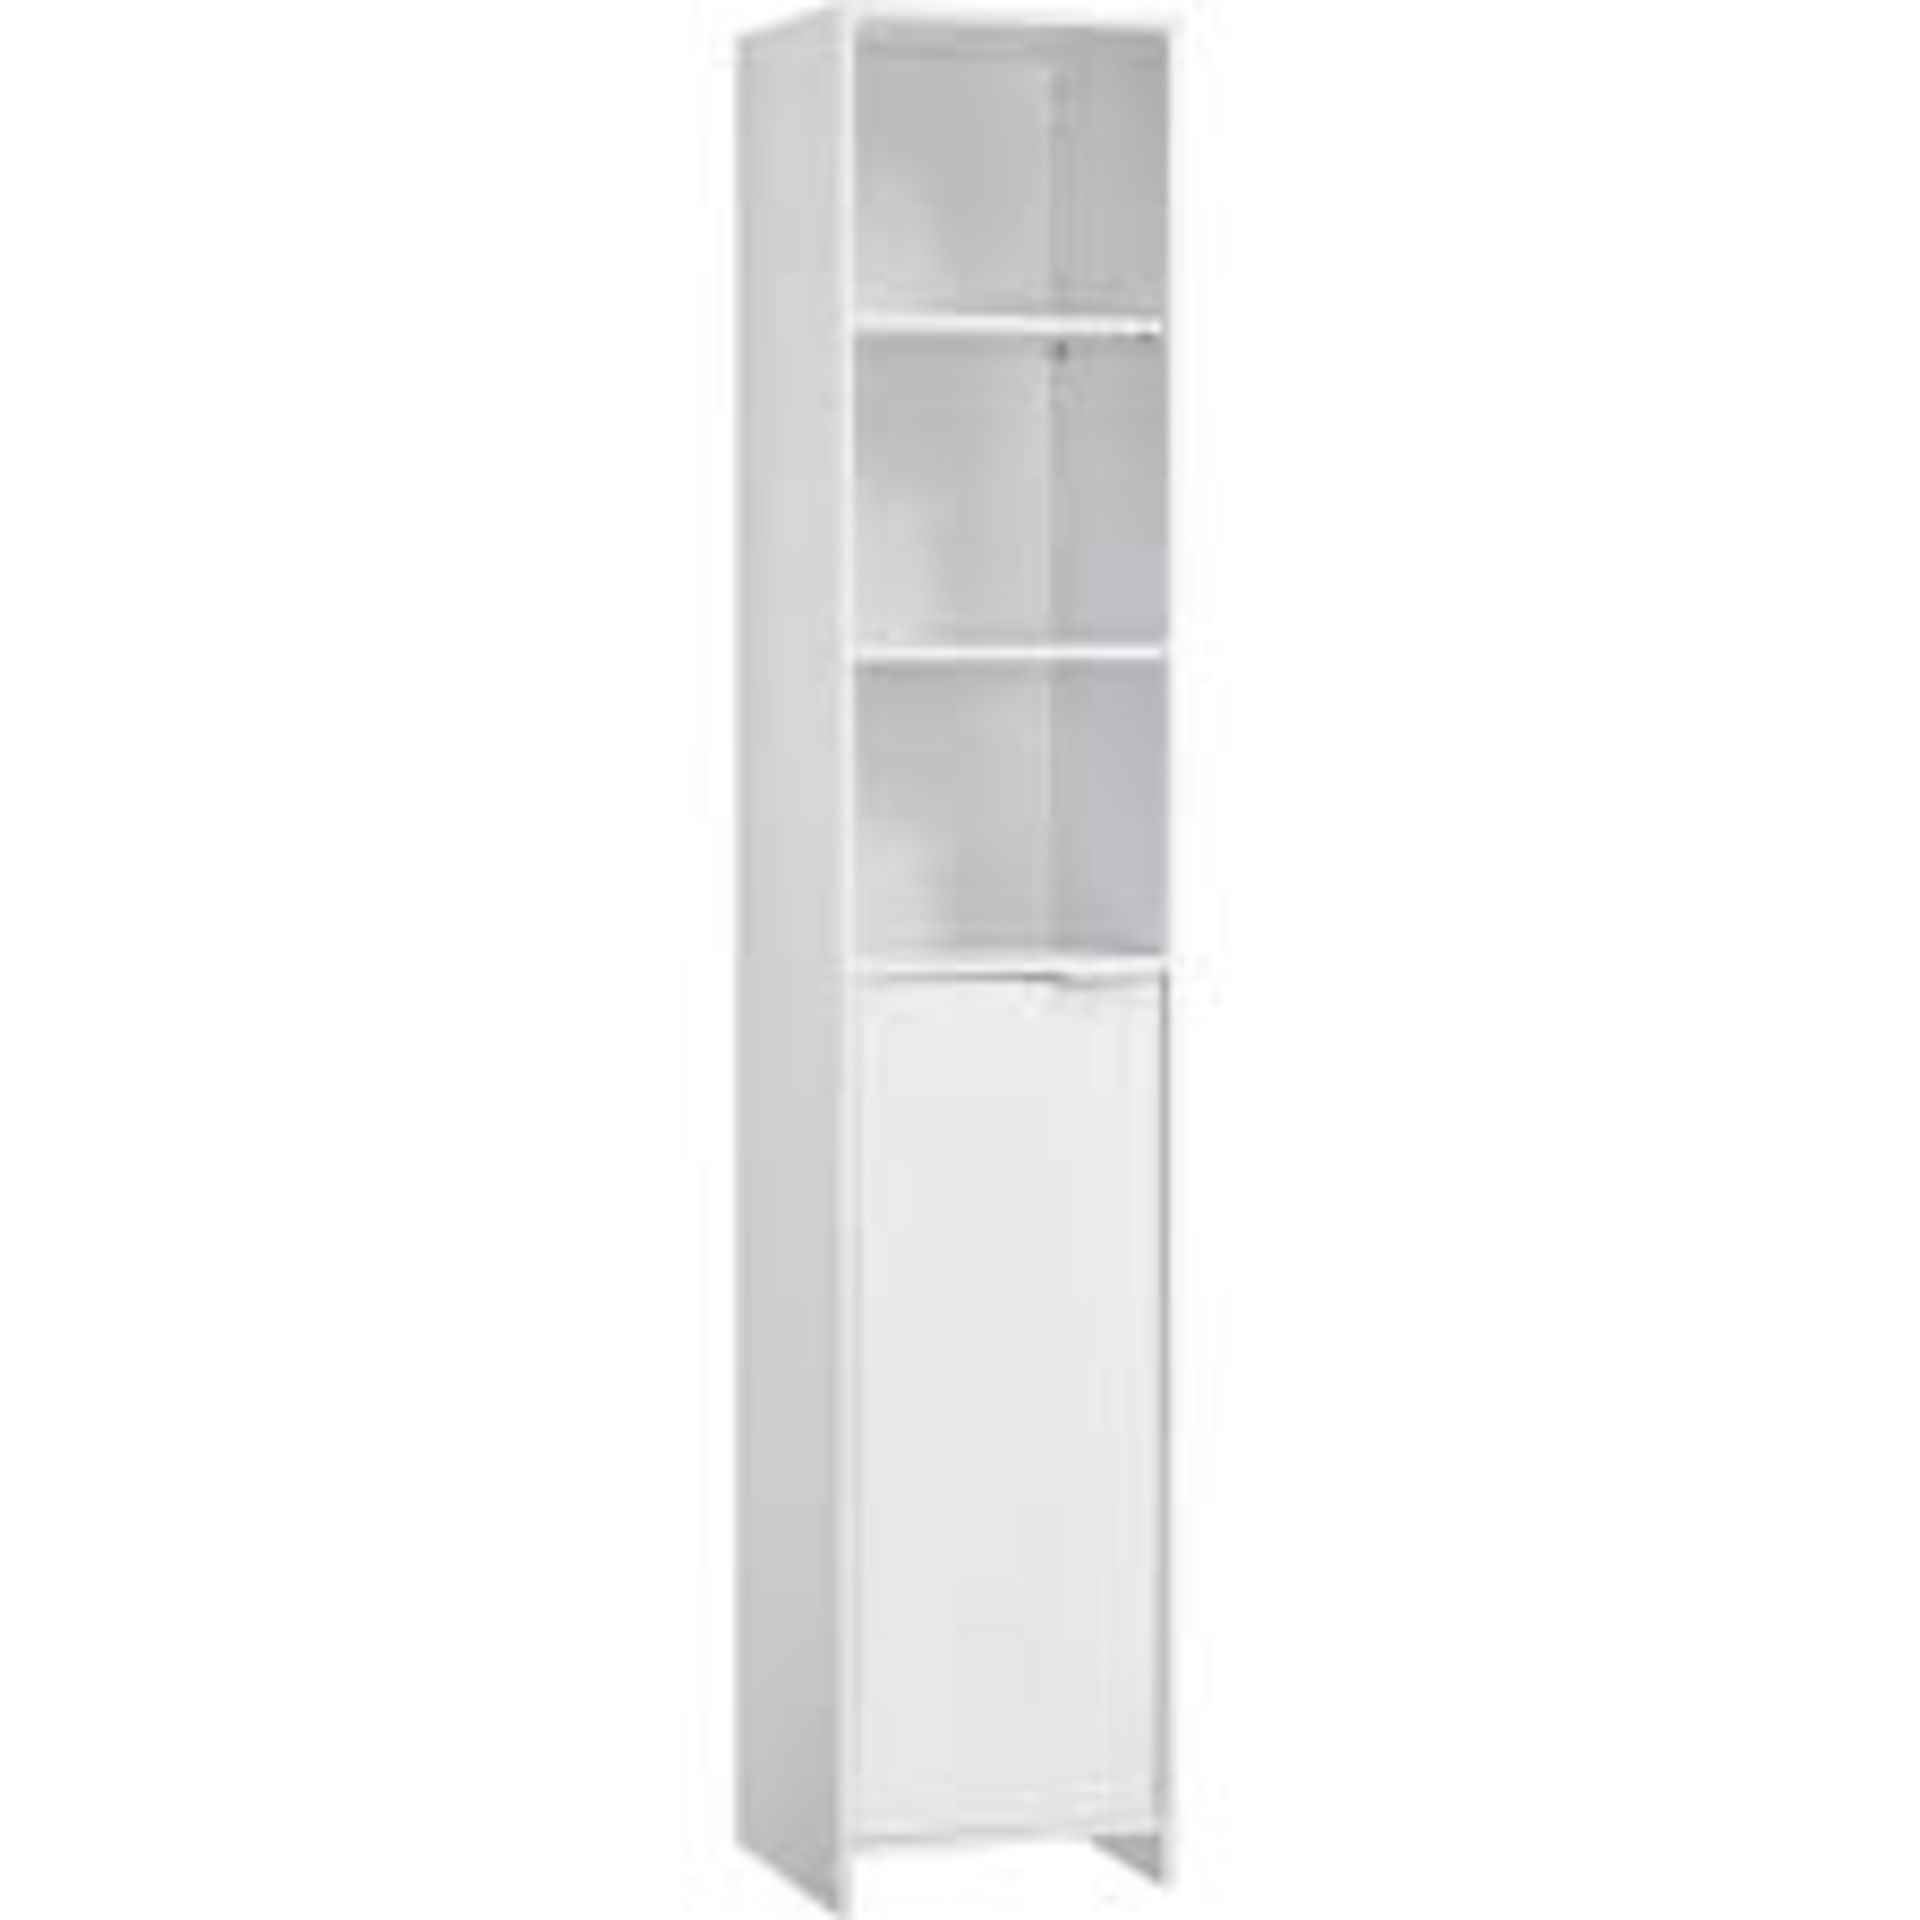 Lambeth White Bathroom Tallboy Storage Cabinet. - SR3. Add simple storage to your bathroom with - Image 2 of 2